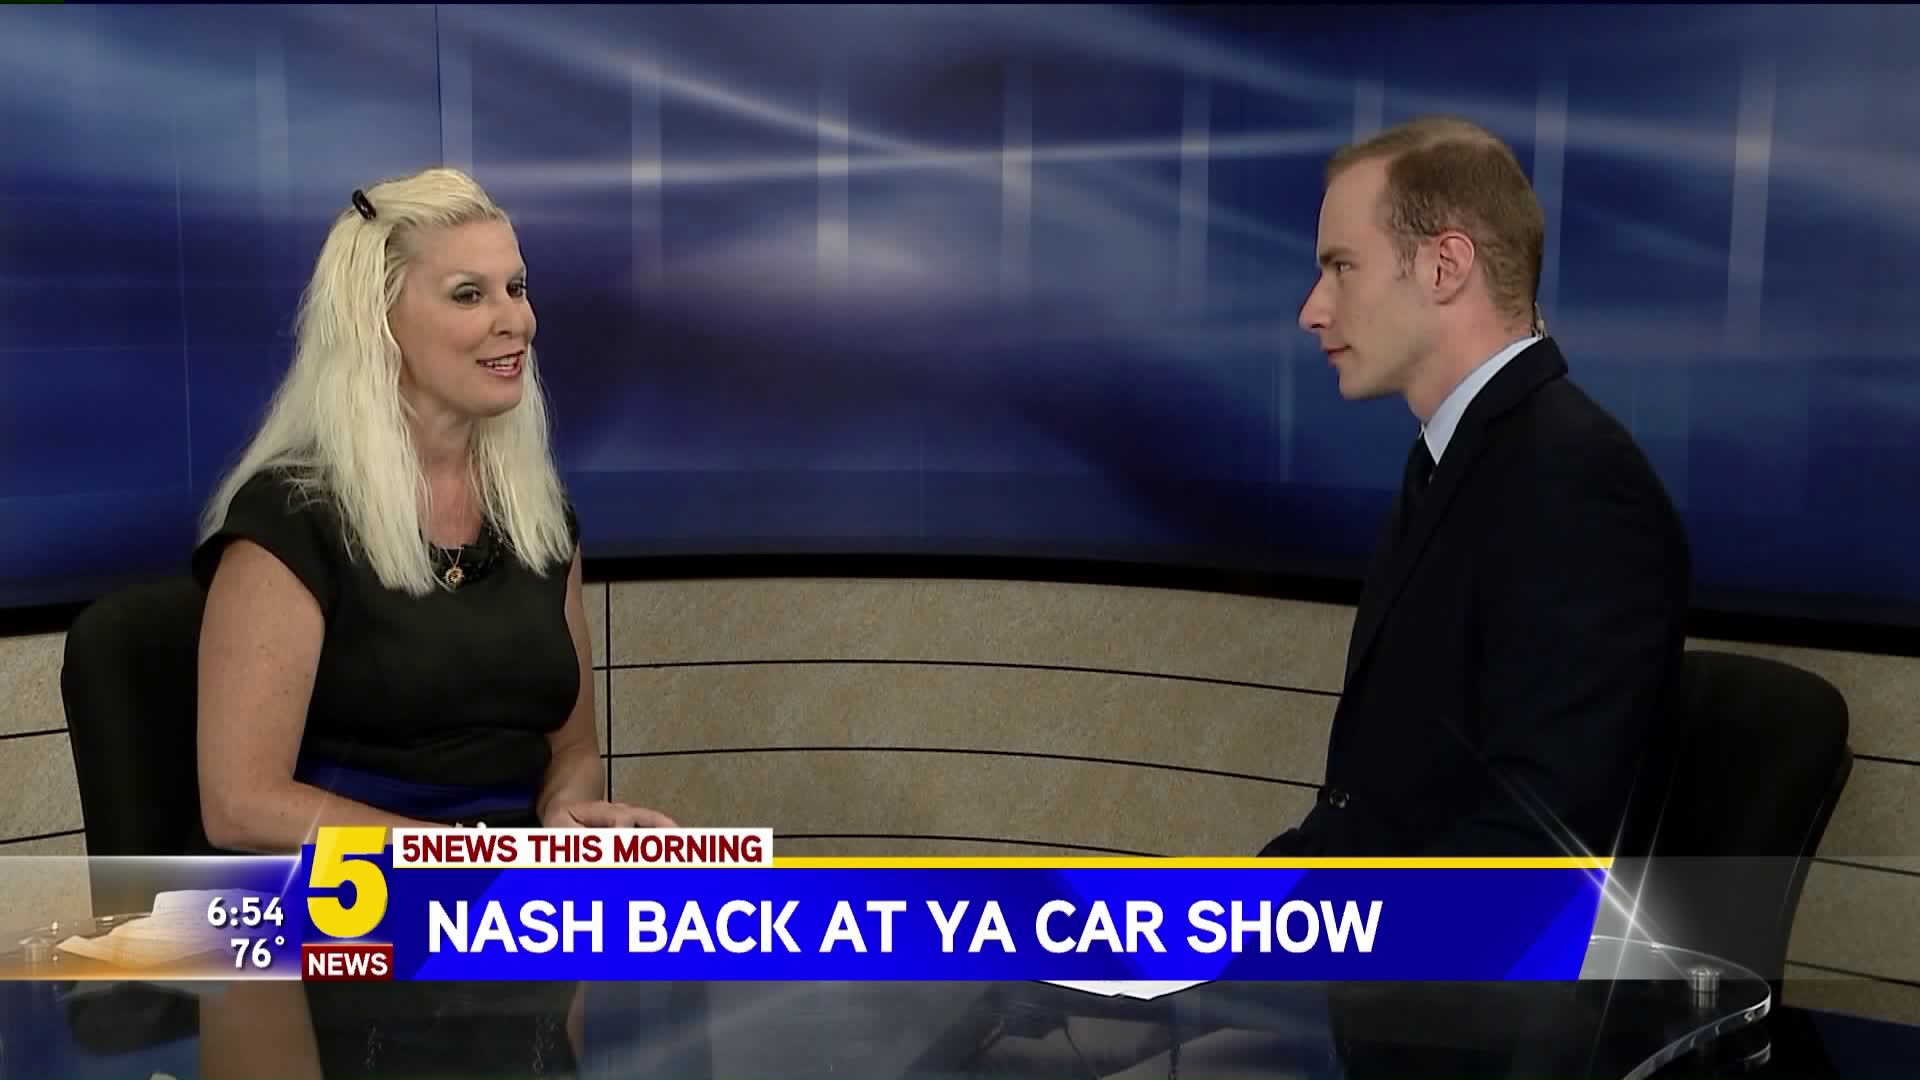 Nash Back At Ya Charity Car Show